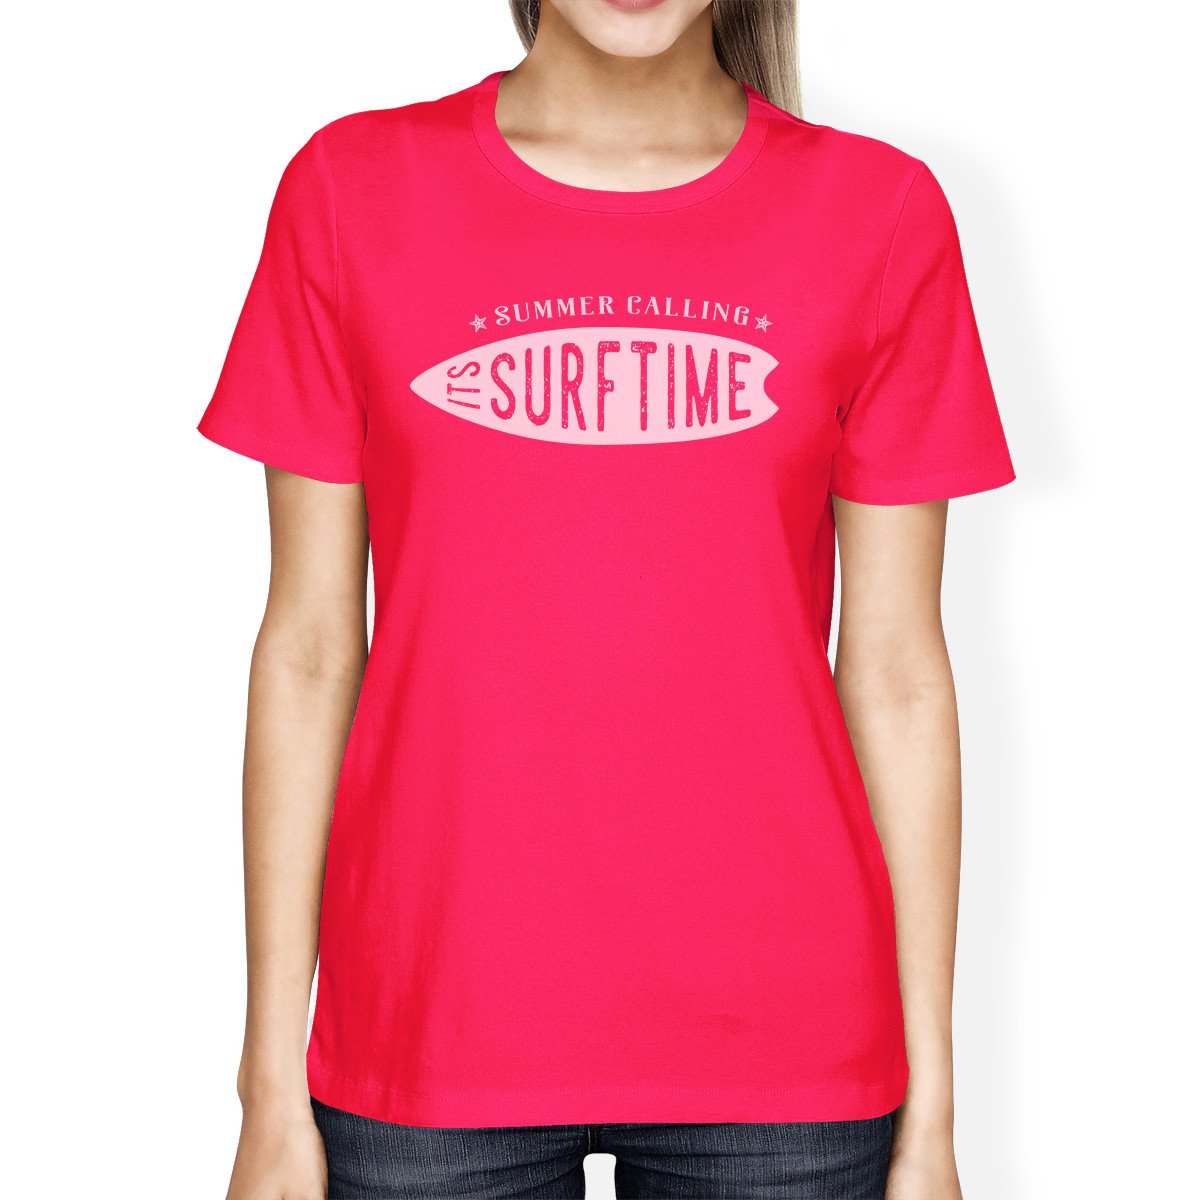 Summer Calling It's Surf Time Womens Hot Pink Shirt